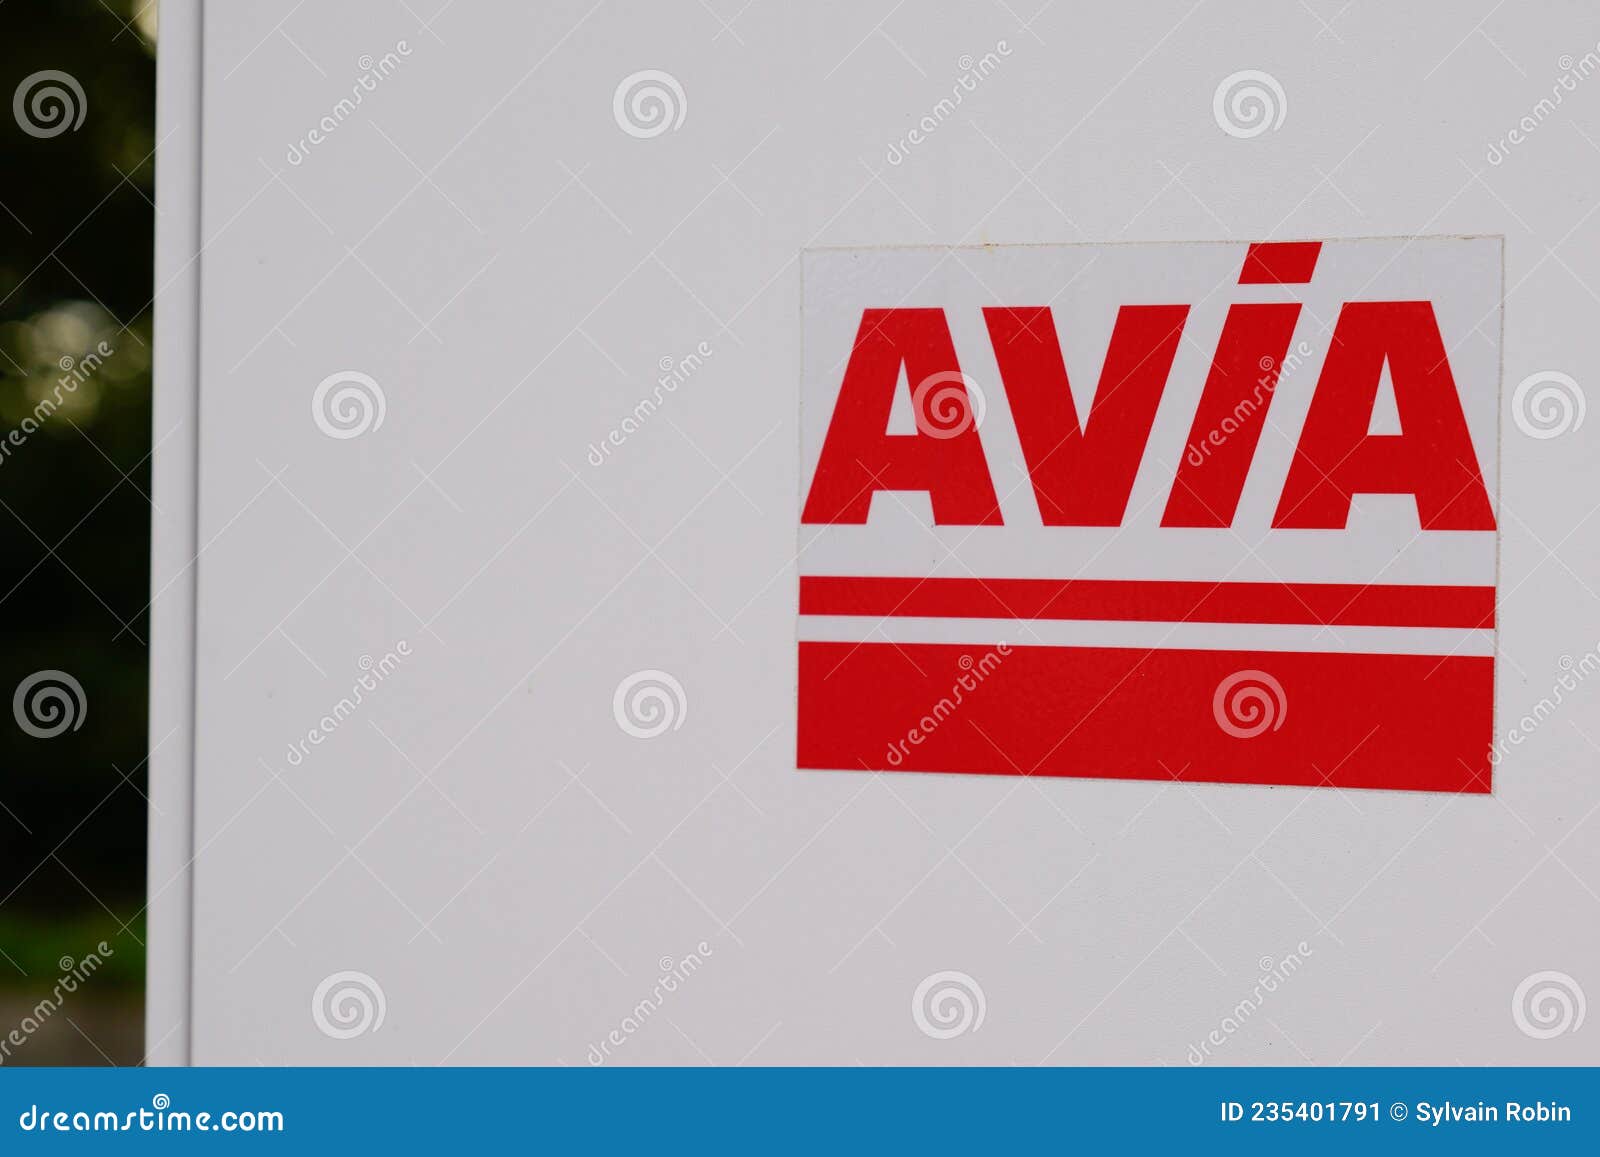 Avia Gas Station Brand Text Company Logo Sign Service Petrol Pump